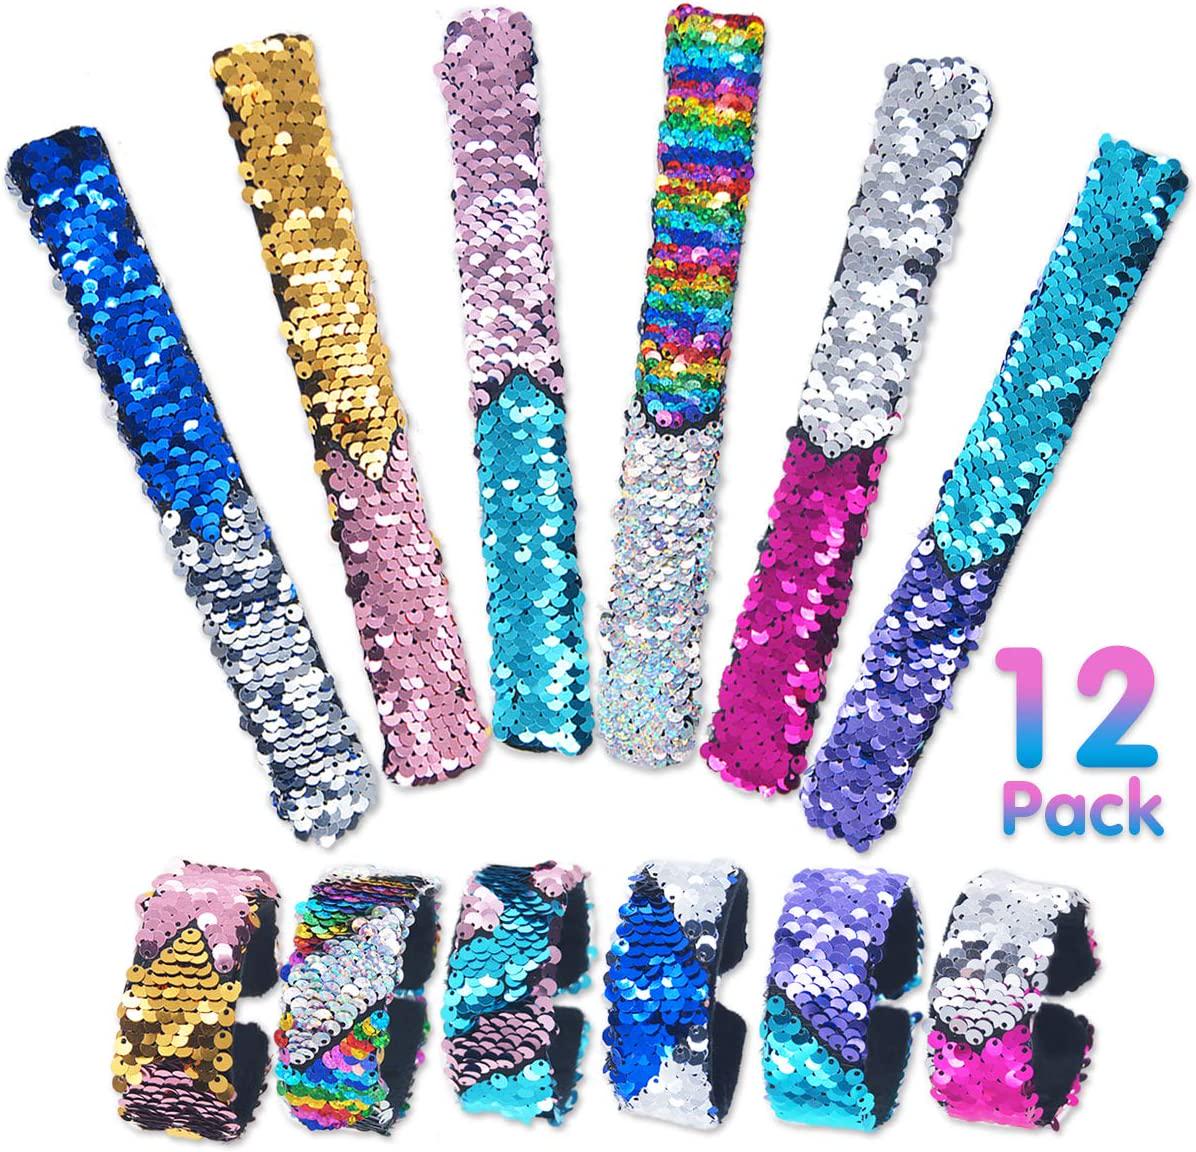 Pawliss, (Sequin Slap Bracelets-12) - Pawliss 12 Pack Little Mermaid Magic Reversible Sequin Slap Bracelets, Birthday Party Favours Supplies Gifts for Girls Kids, Pink Blue Purple